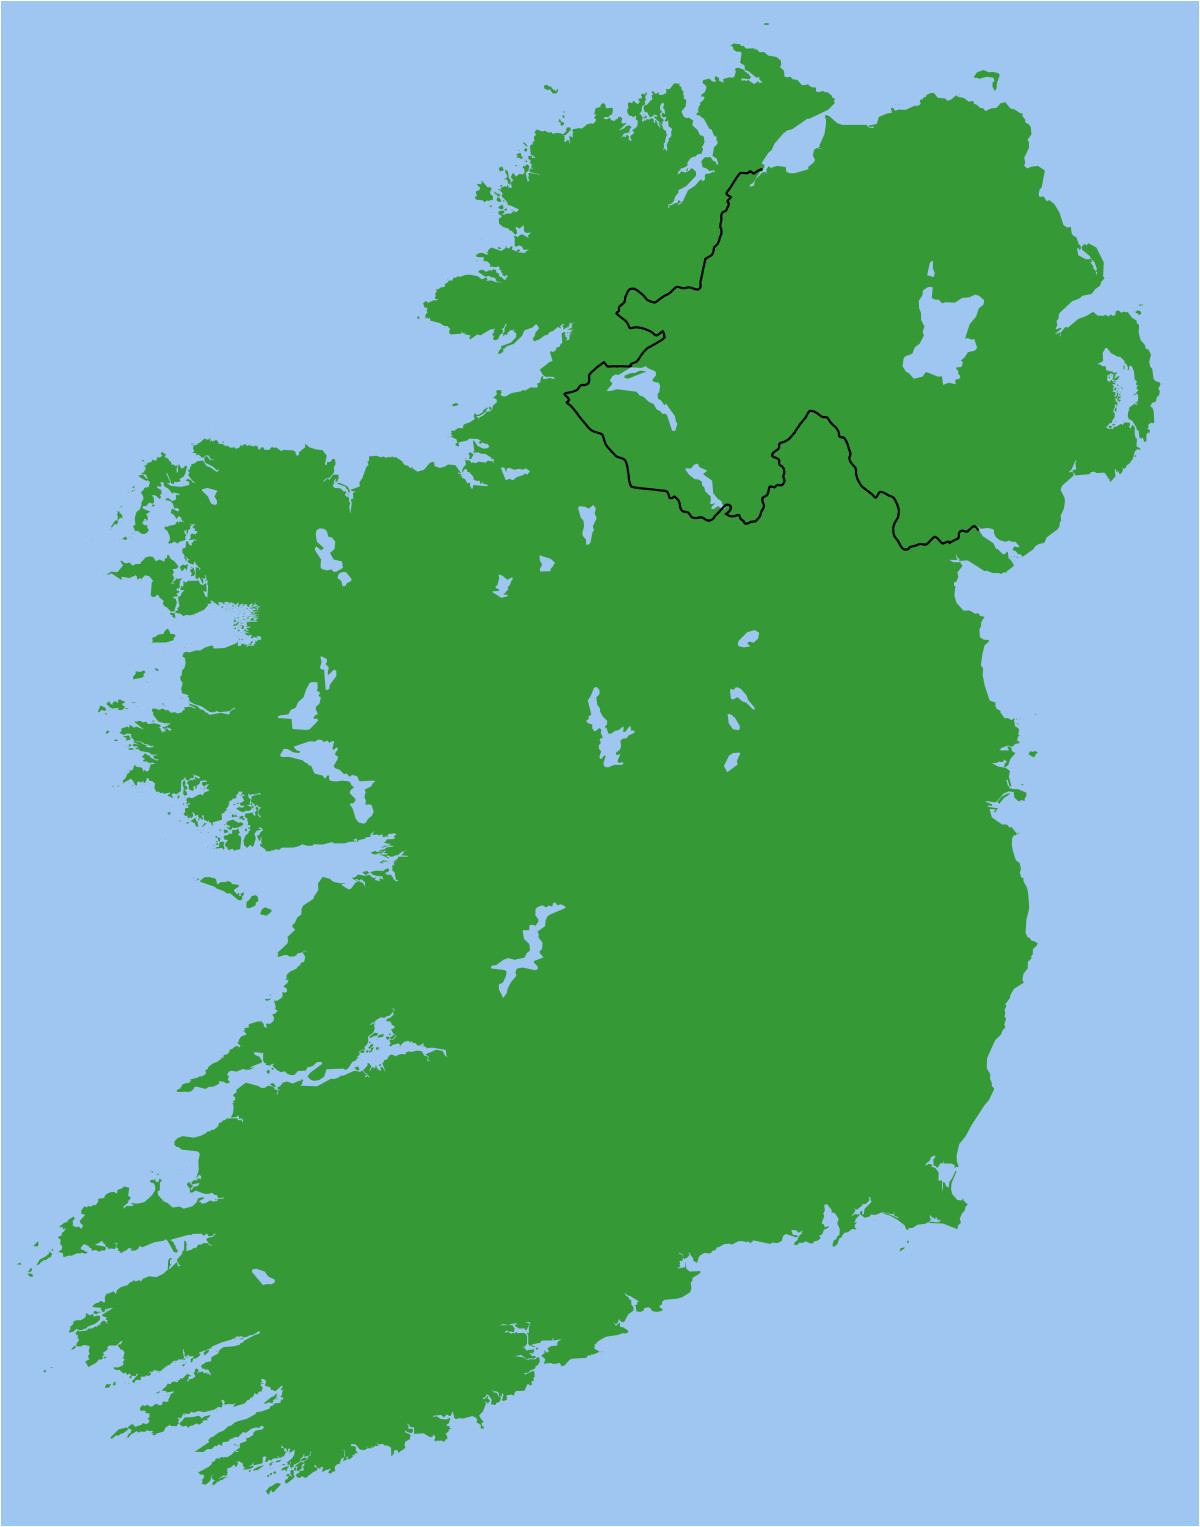 republic of ireland united kingdom border wikipedia